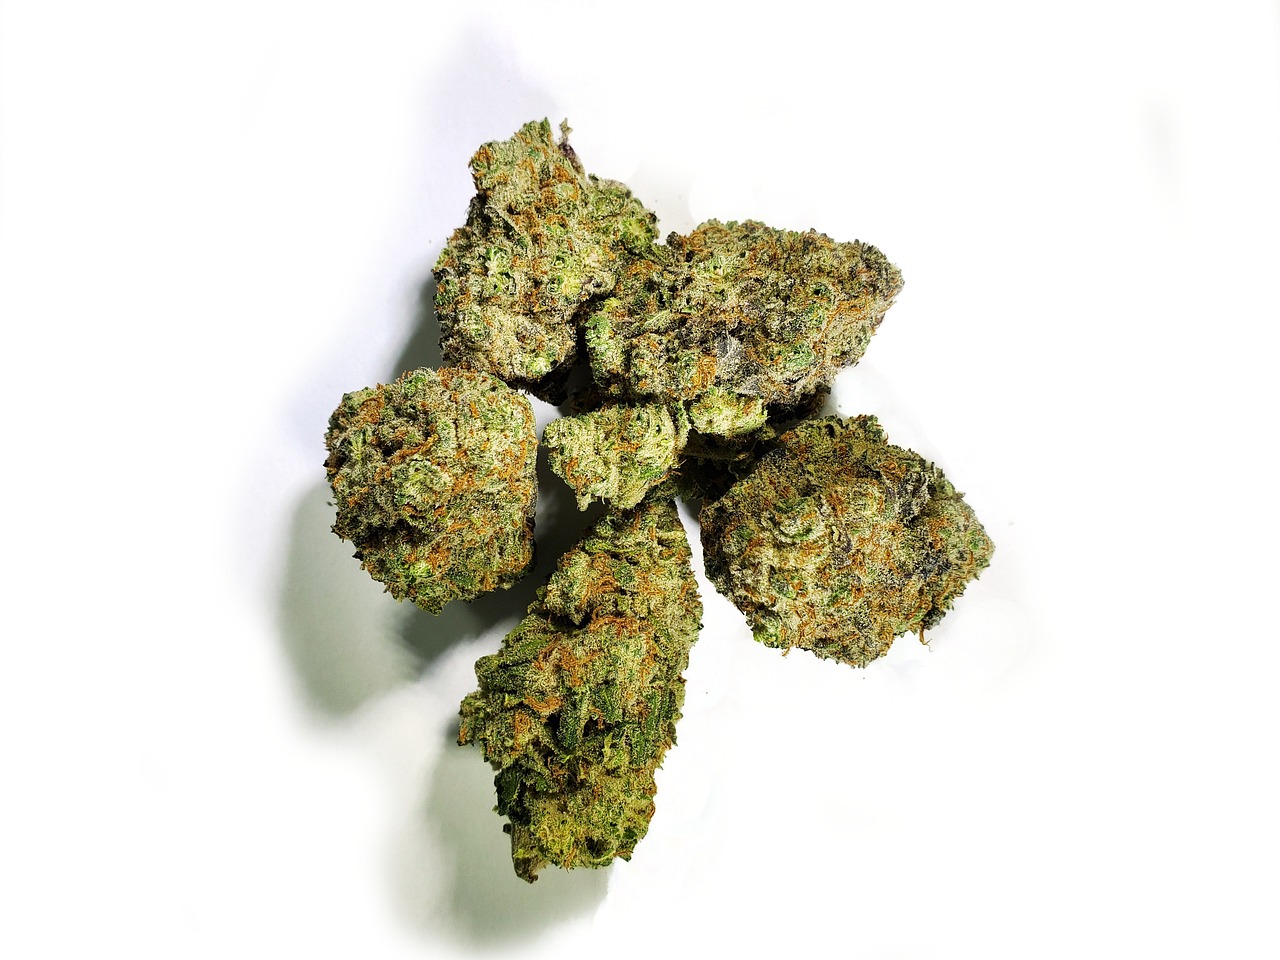 Benefits of hybrid cannabis strains